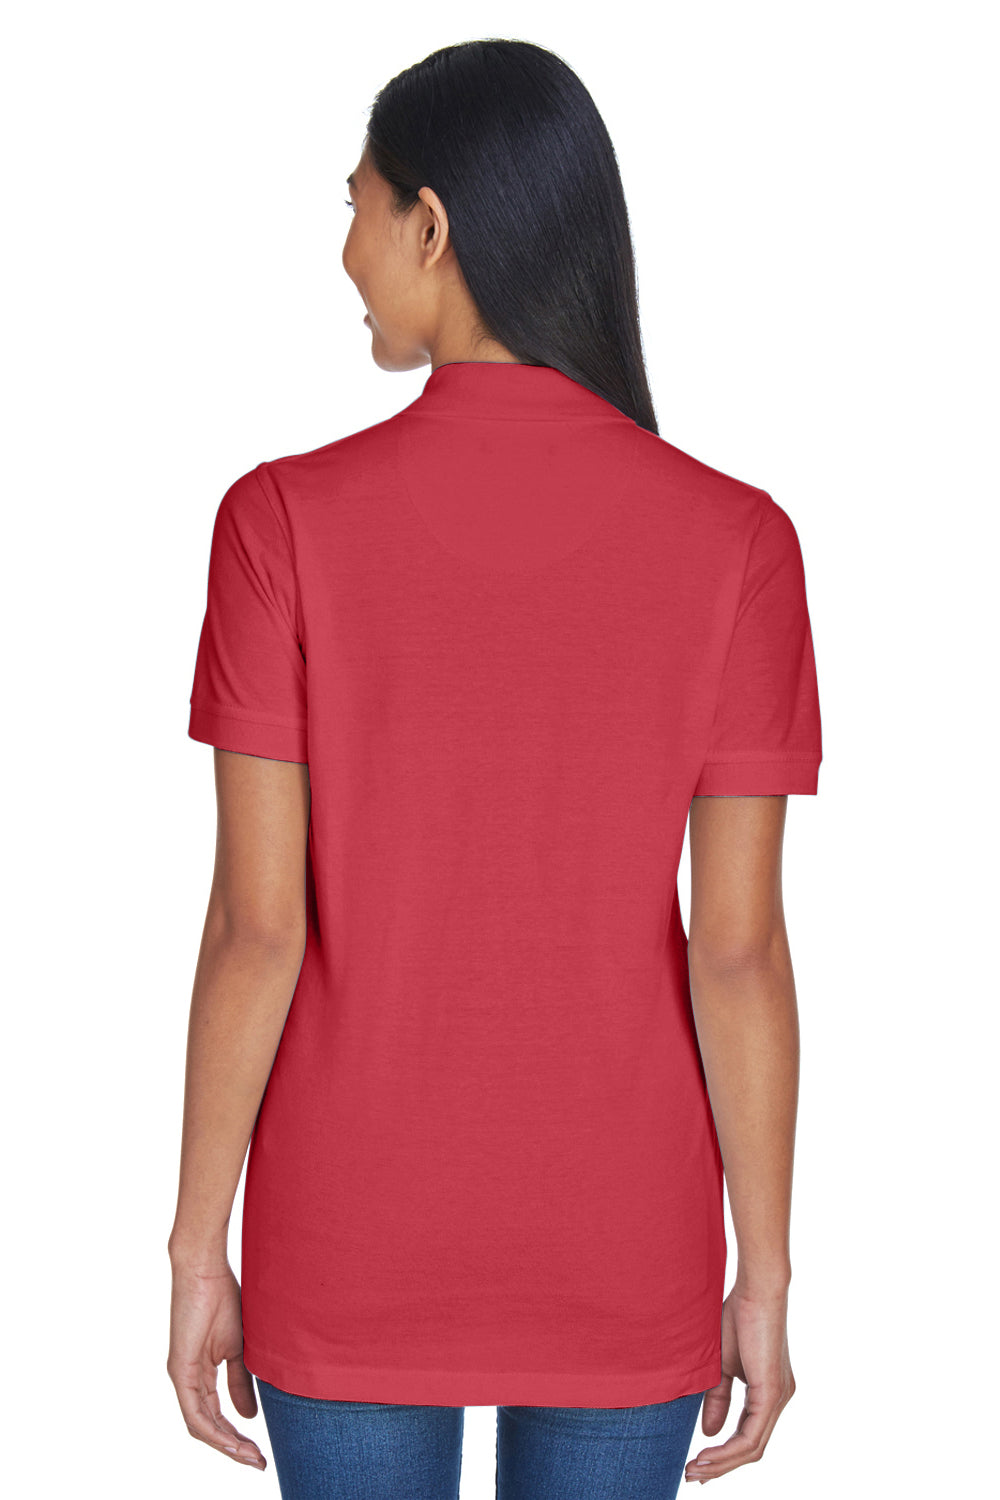 UltraClub 8530 Womens Classic Short Sleeve Polo Shirt Cardinal Red Back